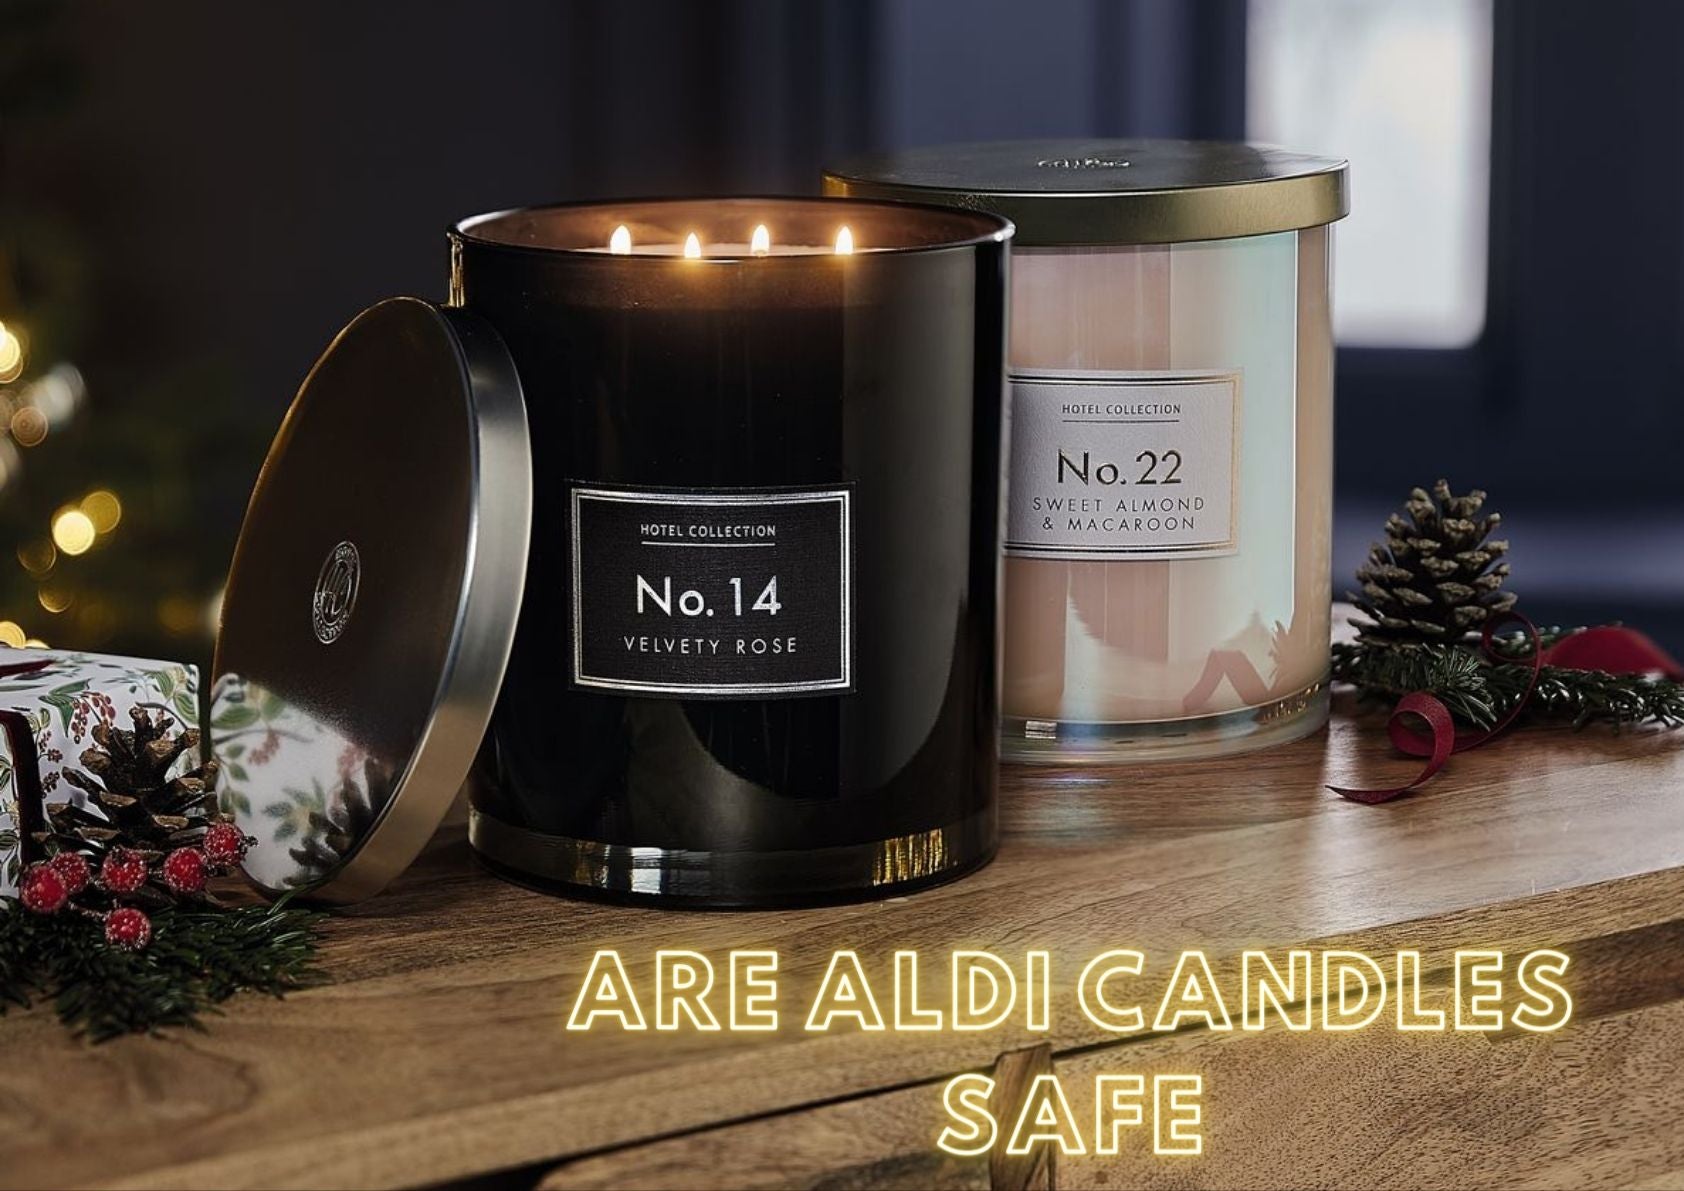 Are Aldi candles safe?